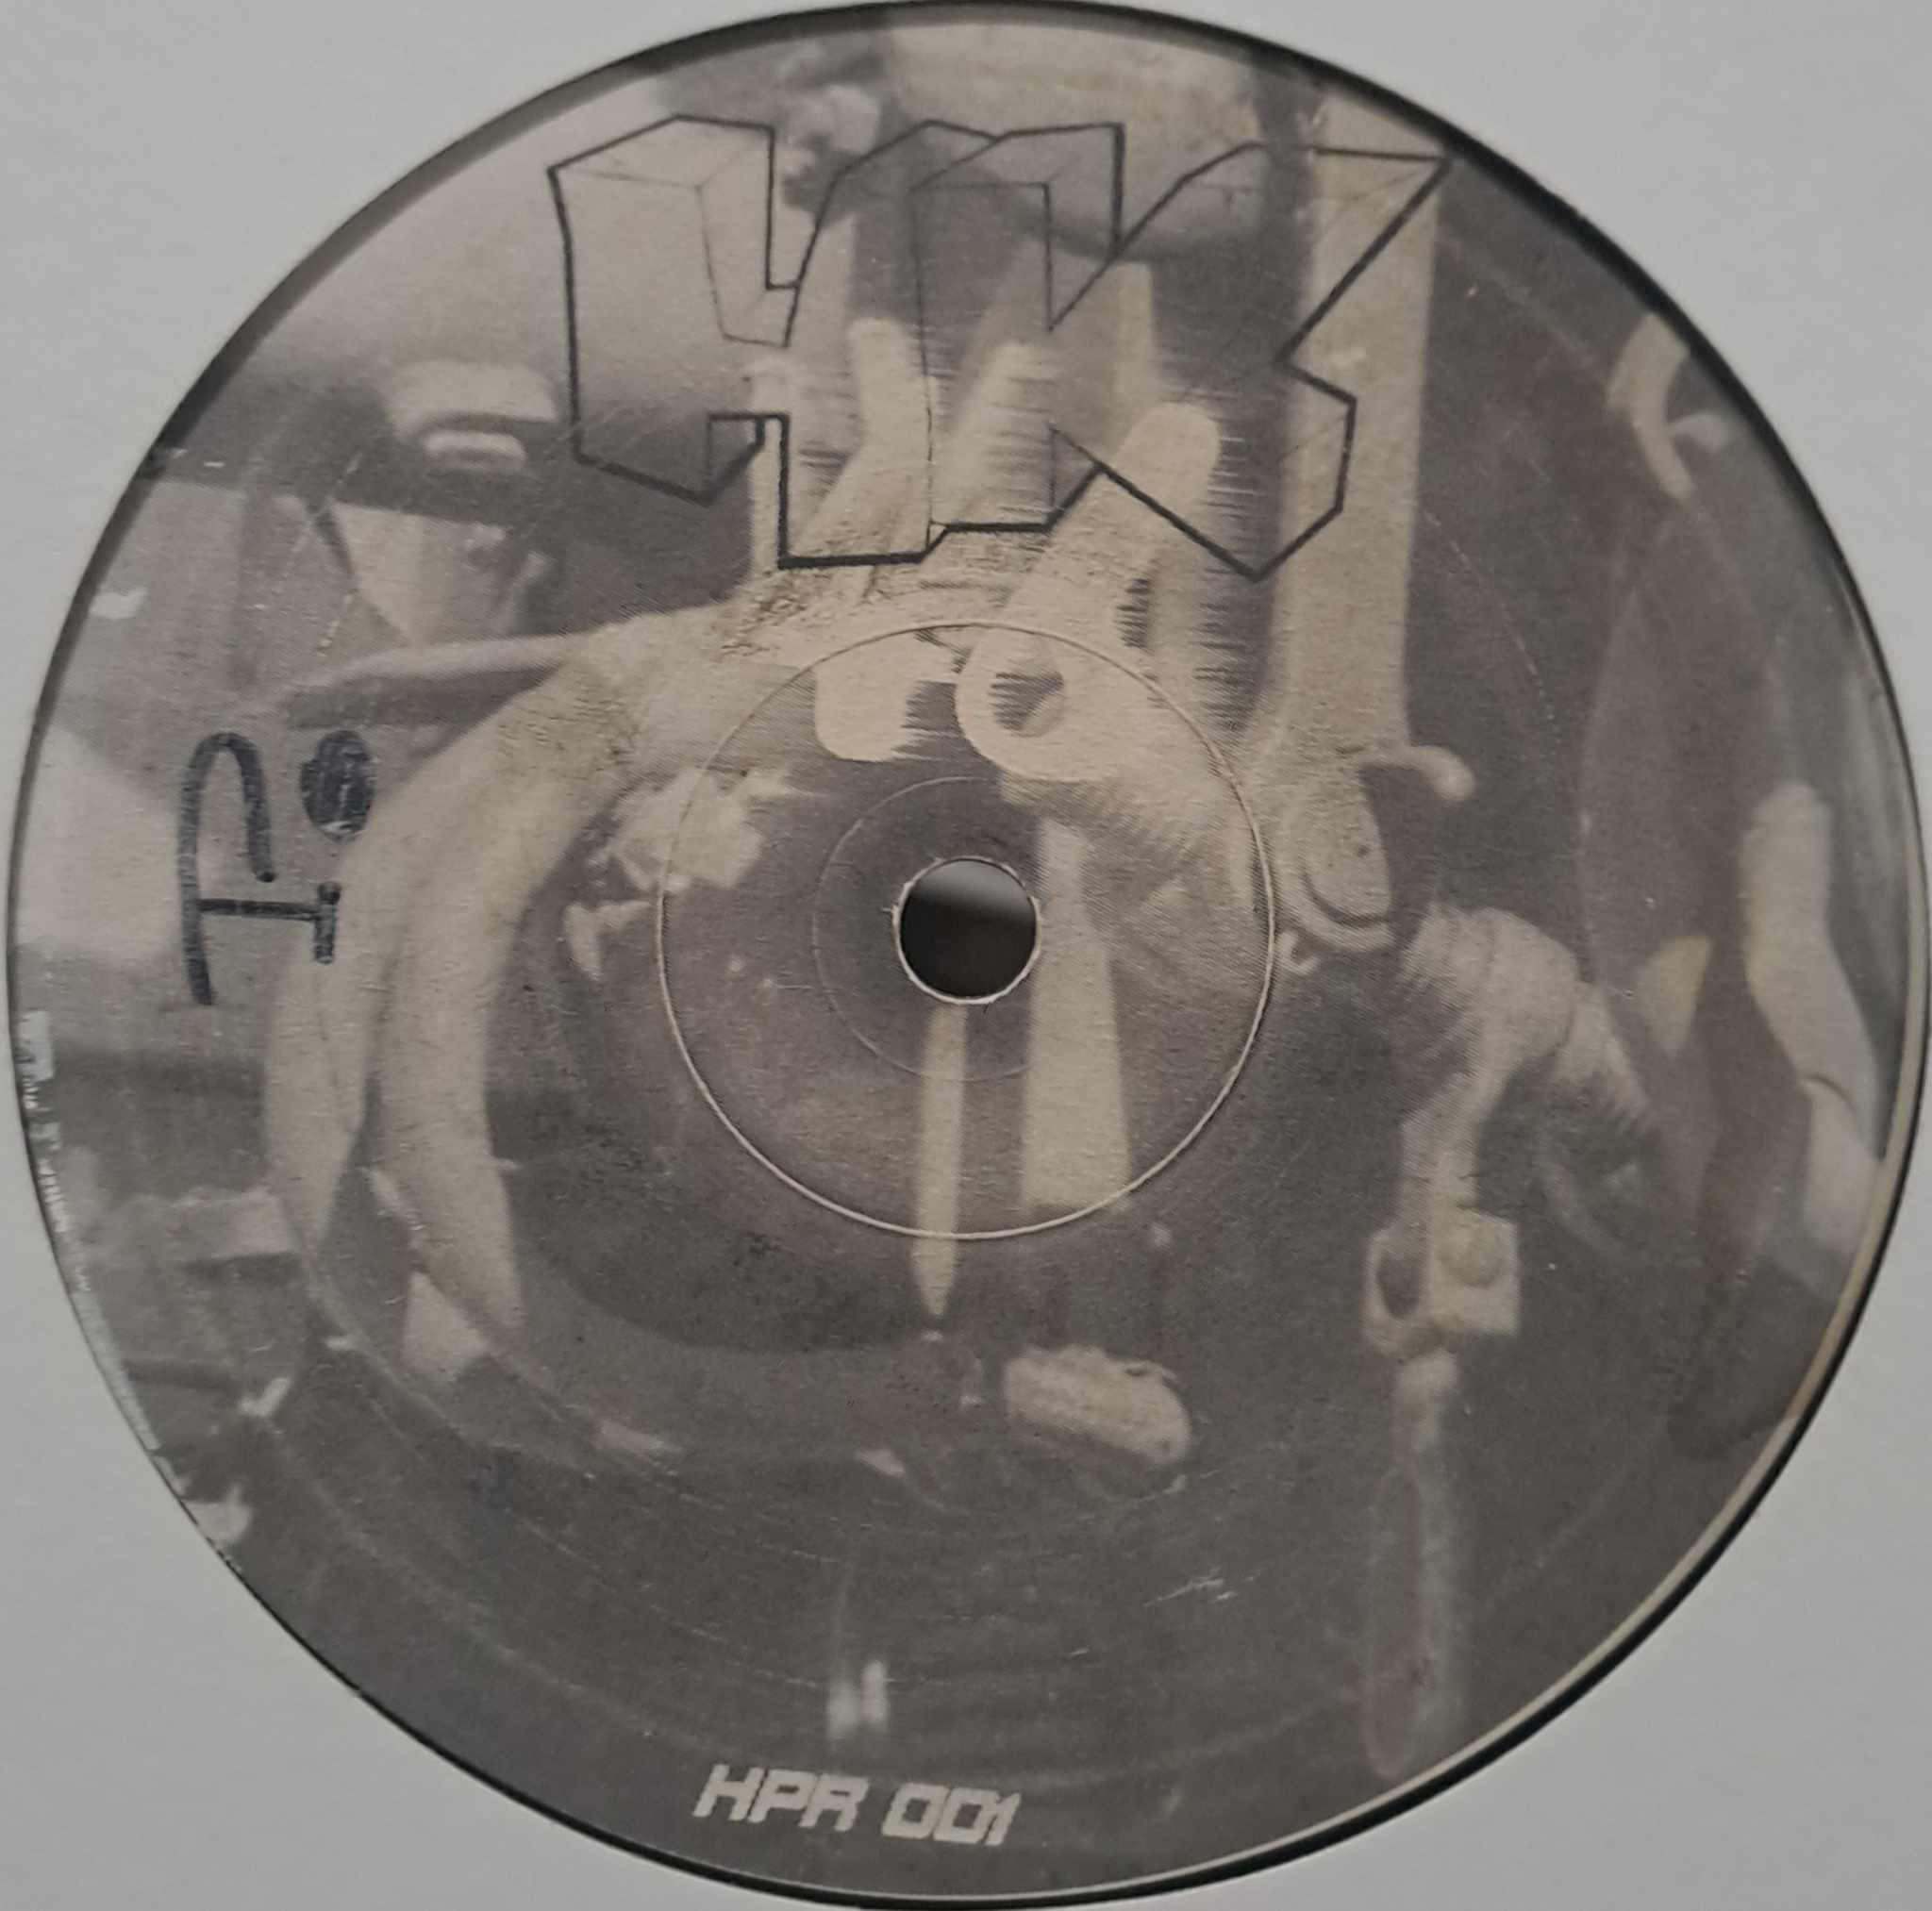 Hokus Pokus 01 (original) - vinyle tribe